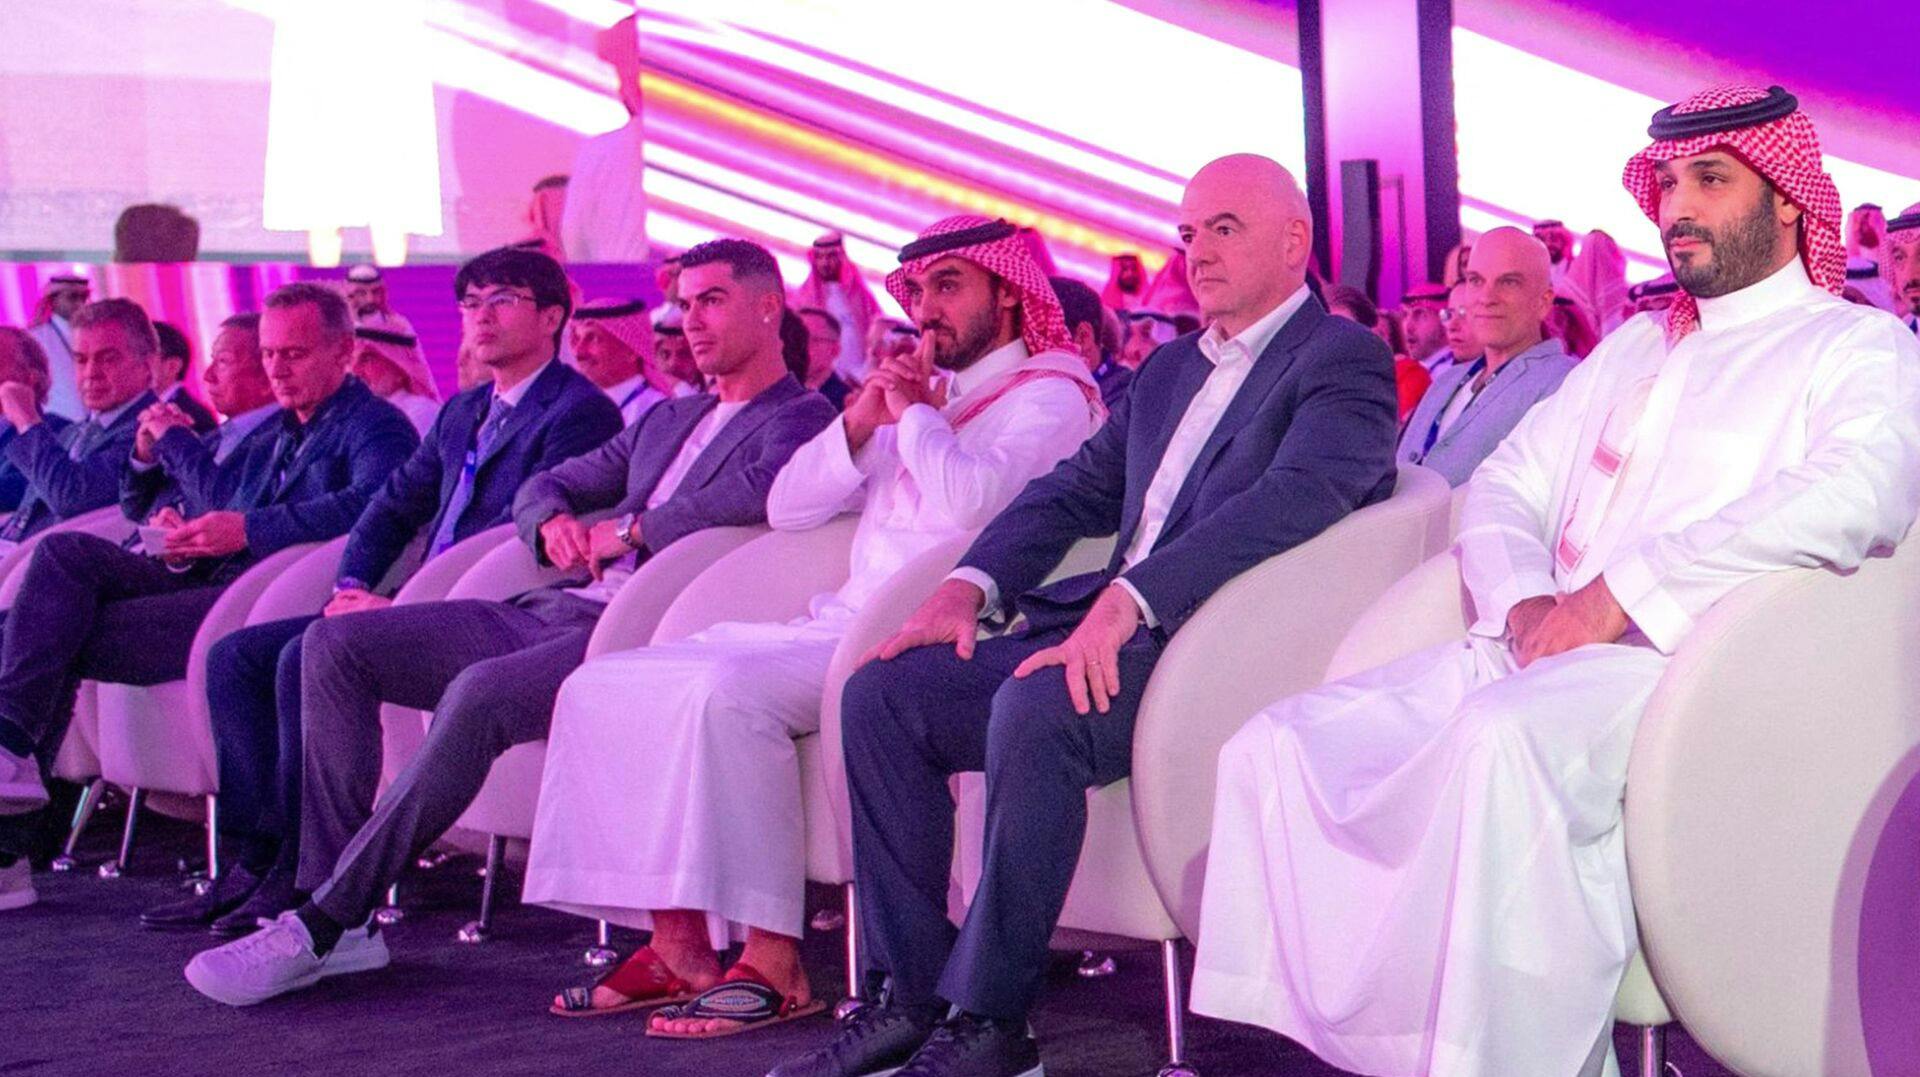 Saudi-Arabien var i oktober værter for e-sports verdensmesterskaberne. I 2034 kan de blive værter for VM i fodbold.